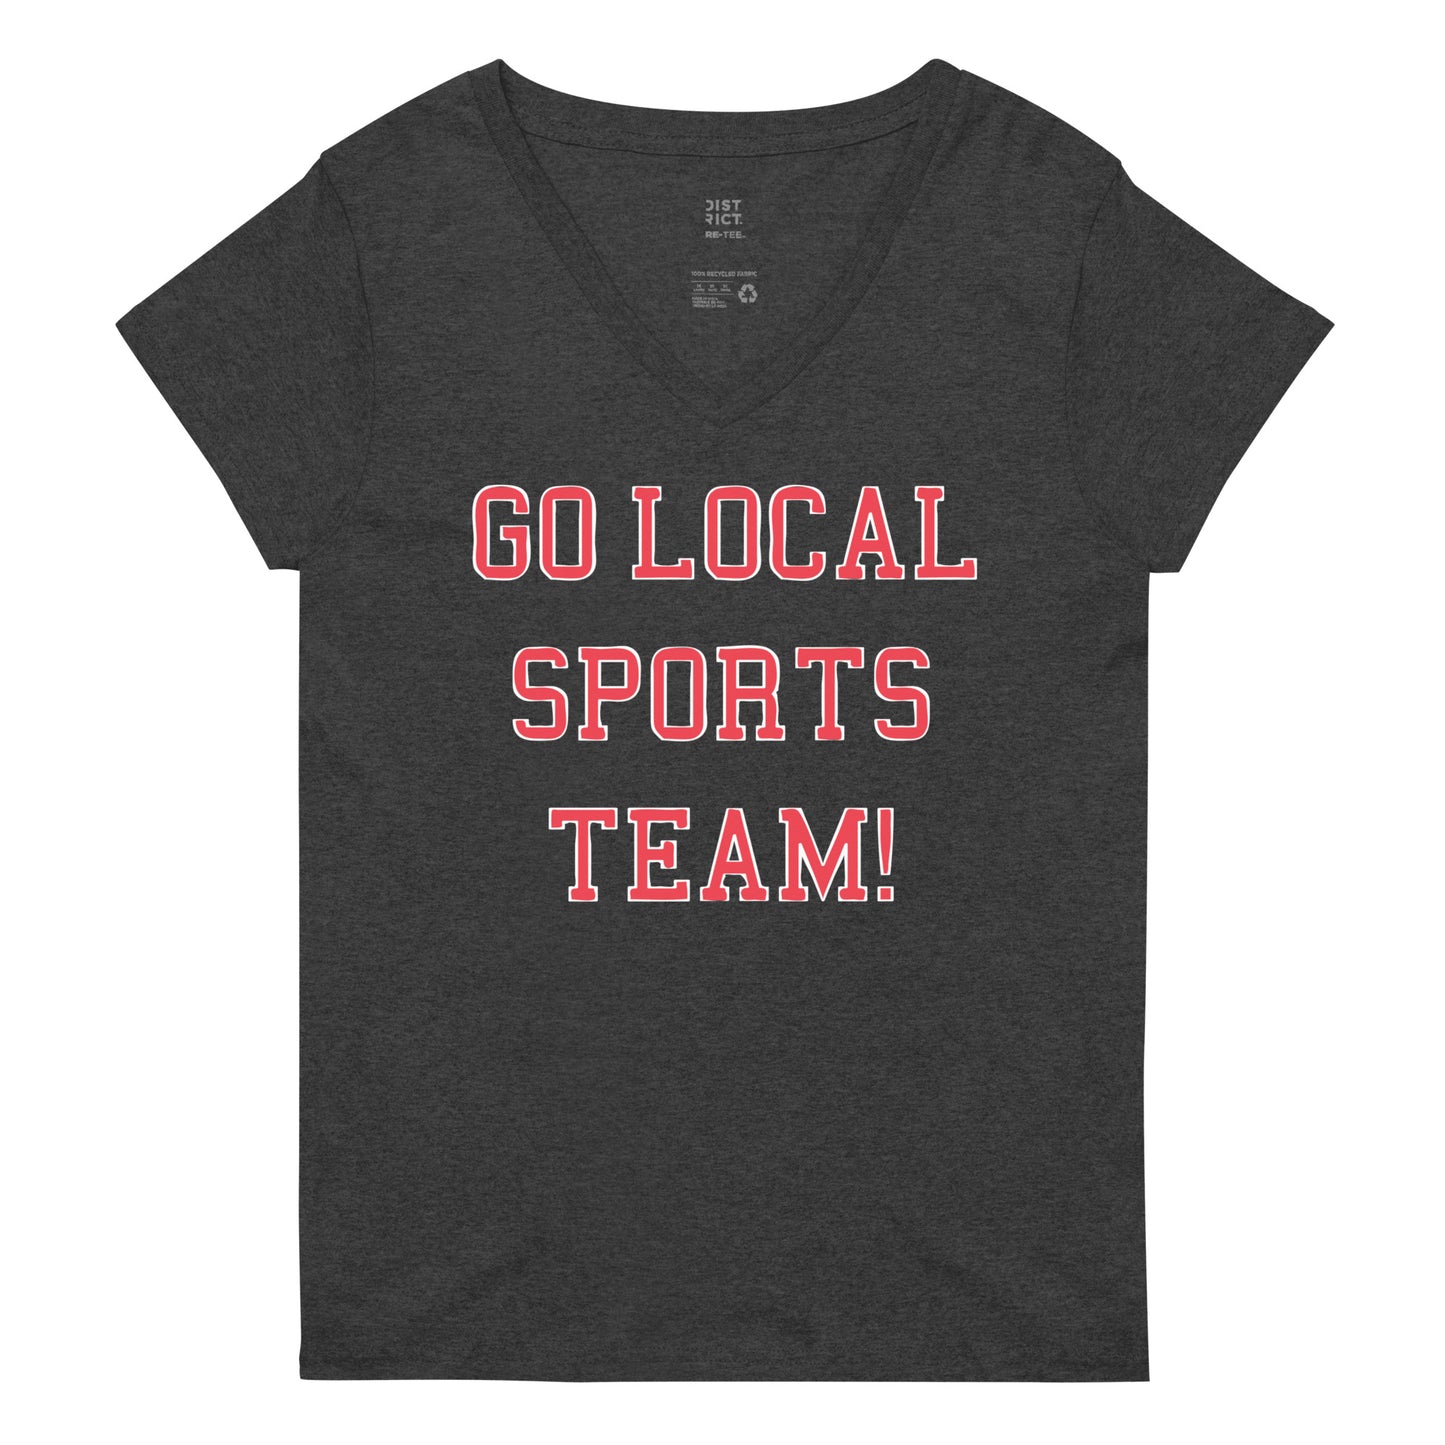 Go Local Sports Team! Women's V-Neck Tee